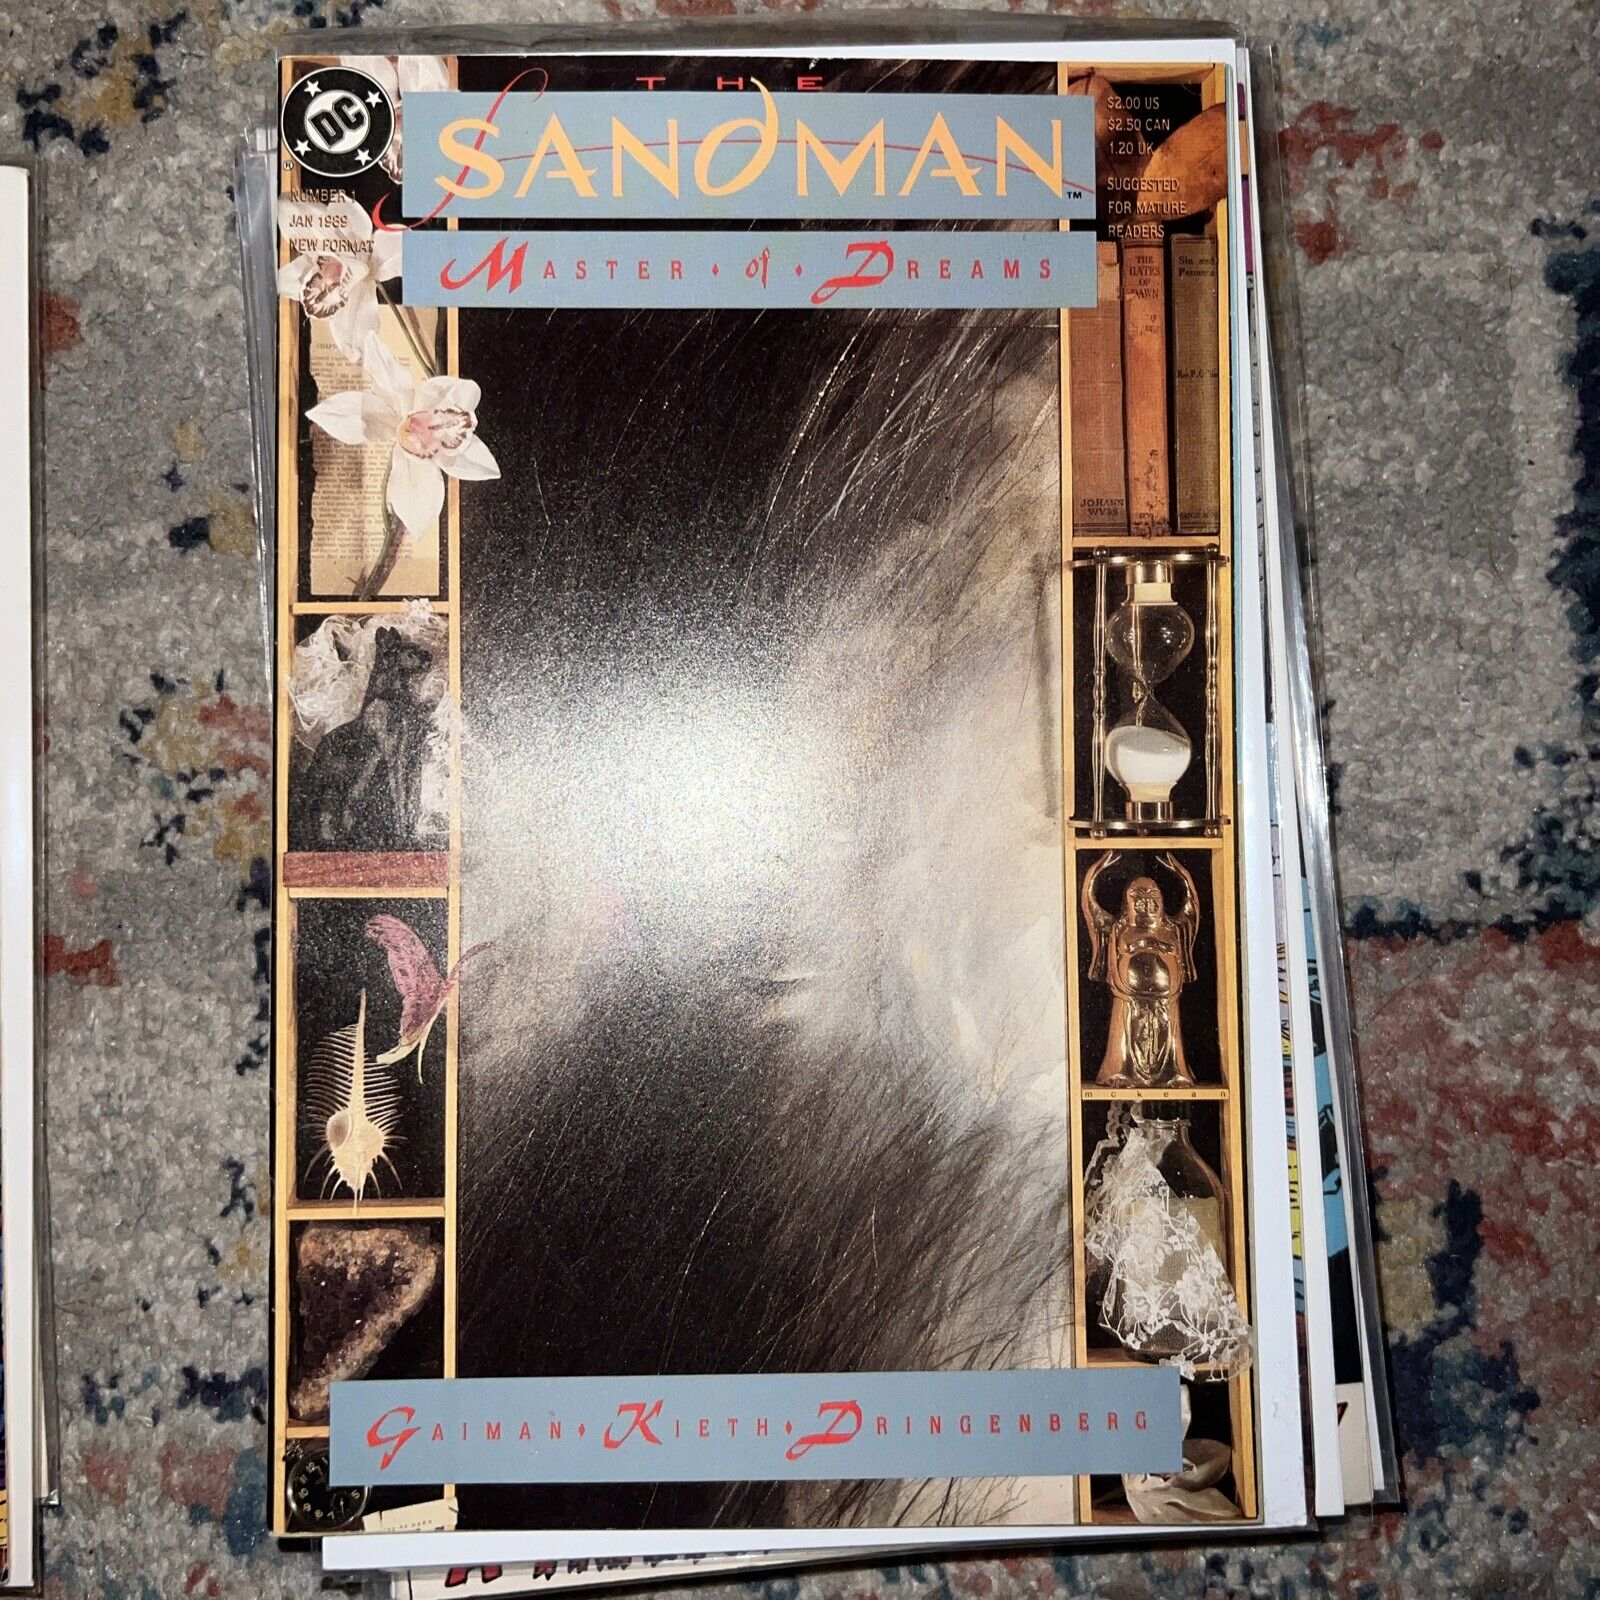 DC Vertigo Sandman Comic Book # 1 by Neil Gaiman (1989) Higher Grade